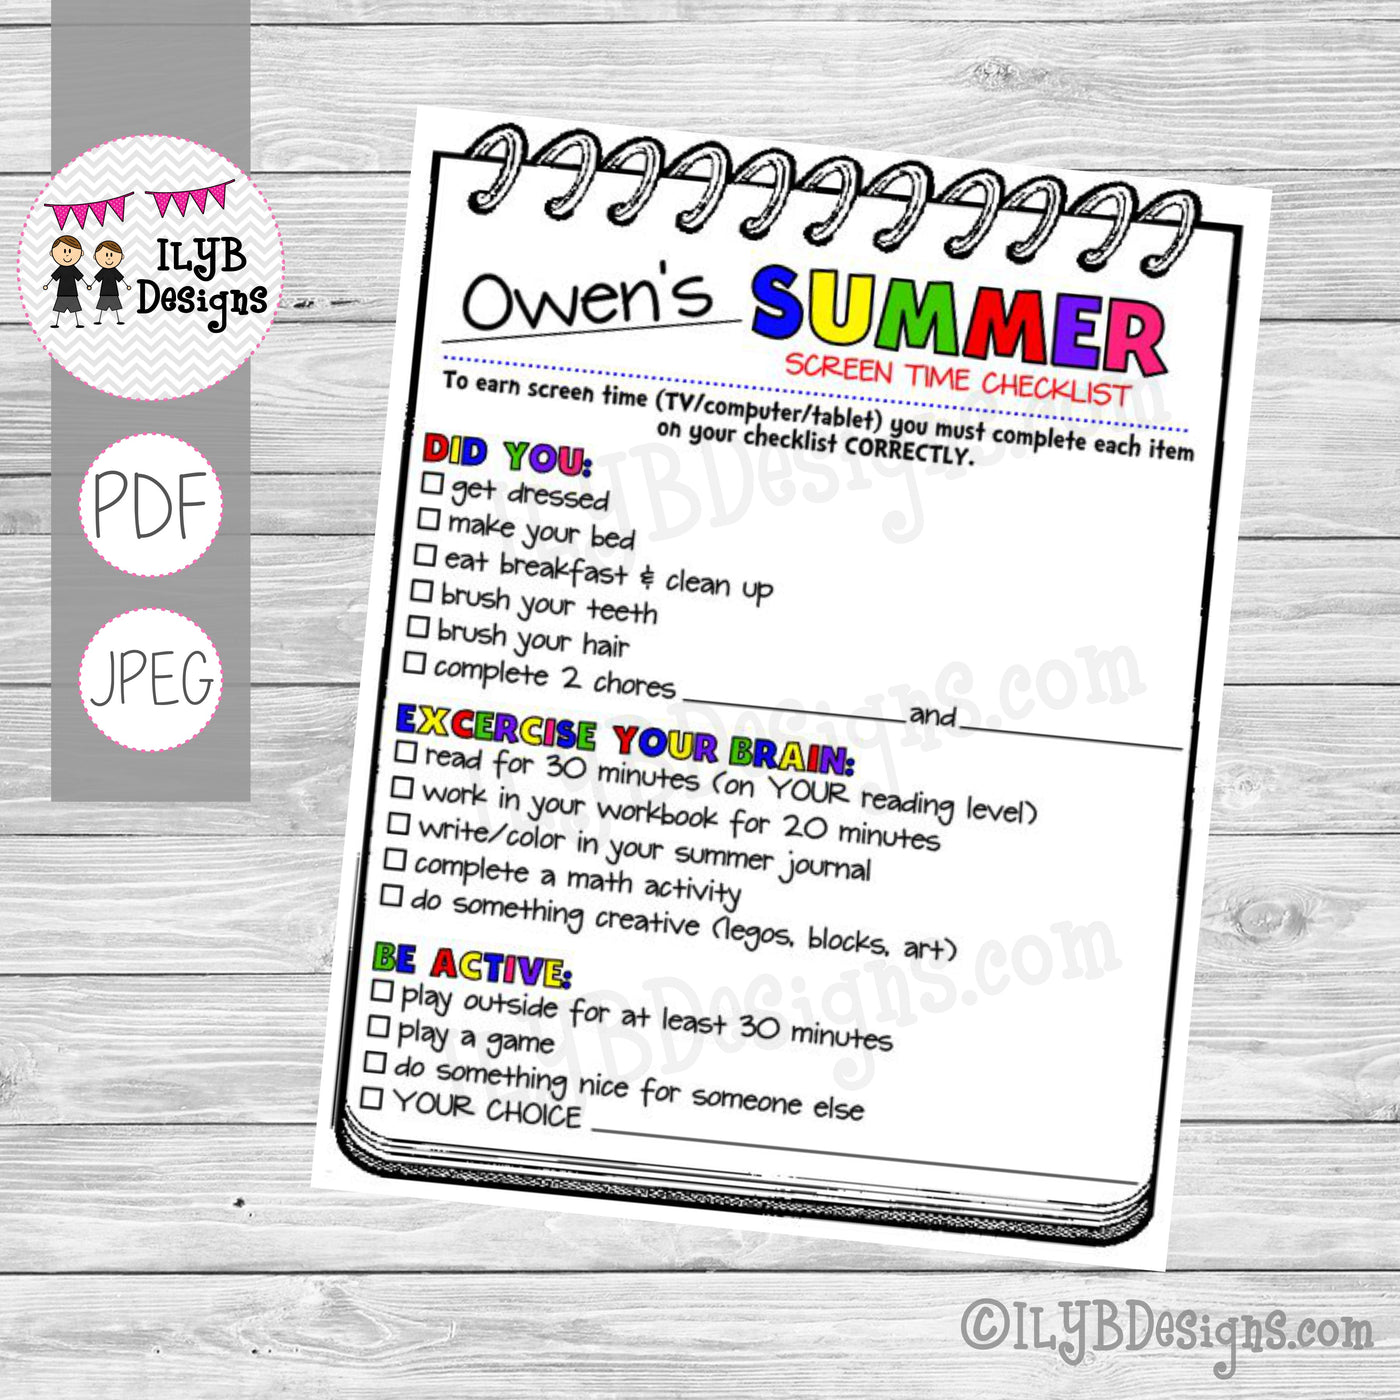 SUMMER SCREEN TIME CHECKLIST PDF, JPEG Printable Files - Summer Schedule - Summer Learning Checklist - Technology Chart - ILYB Designs